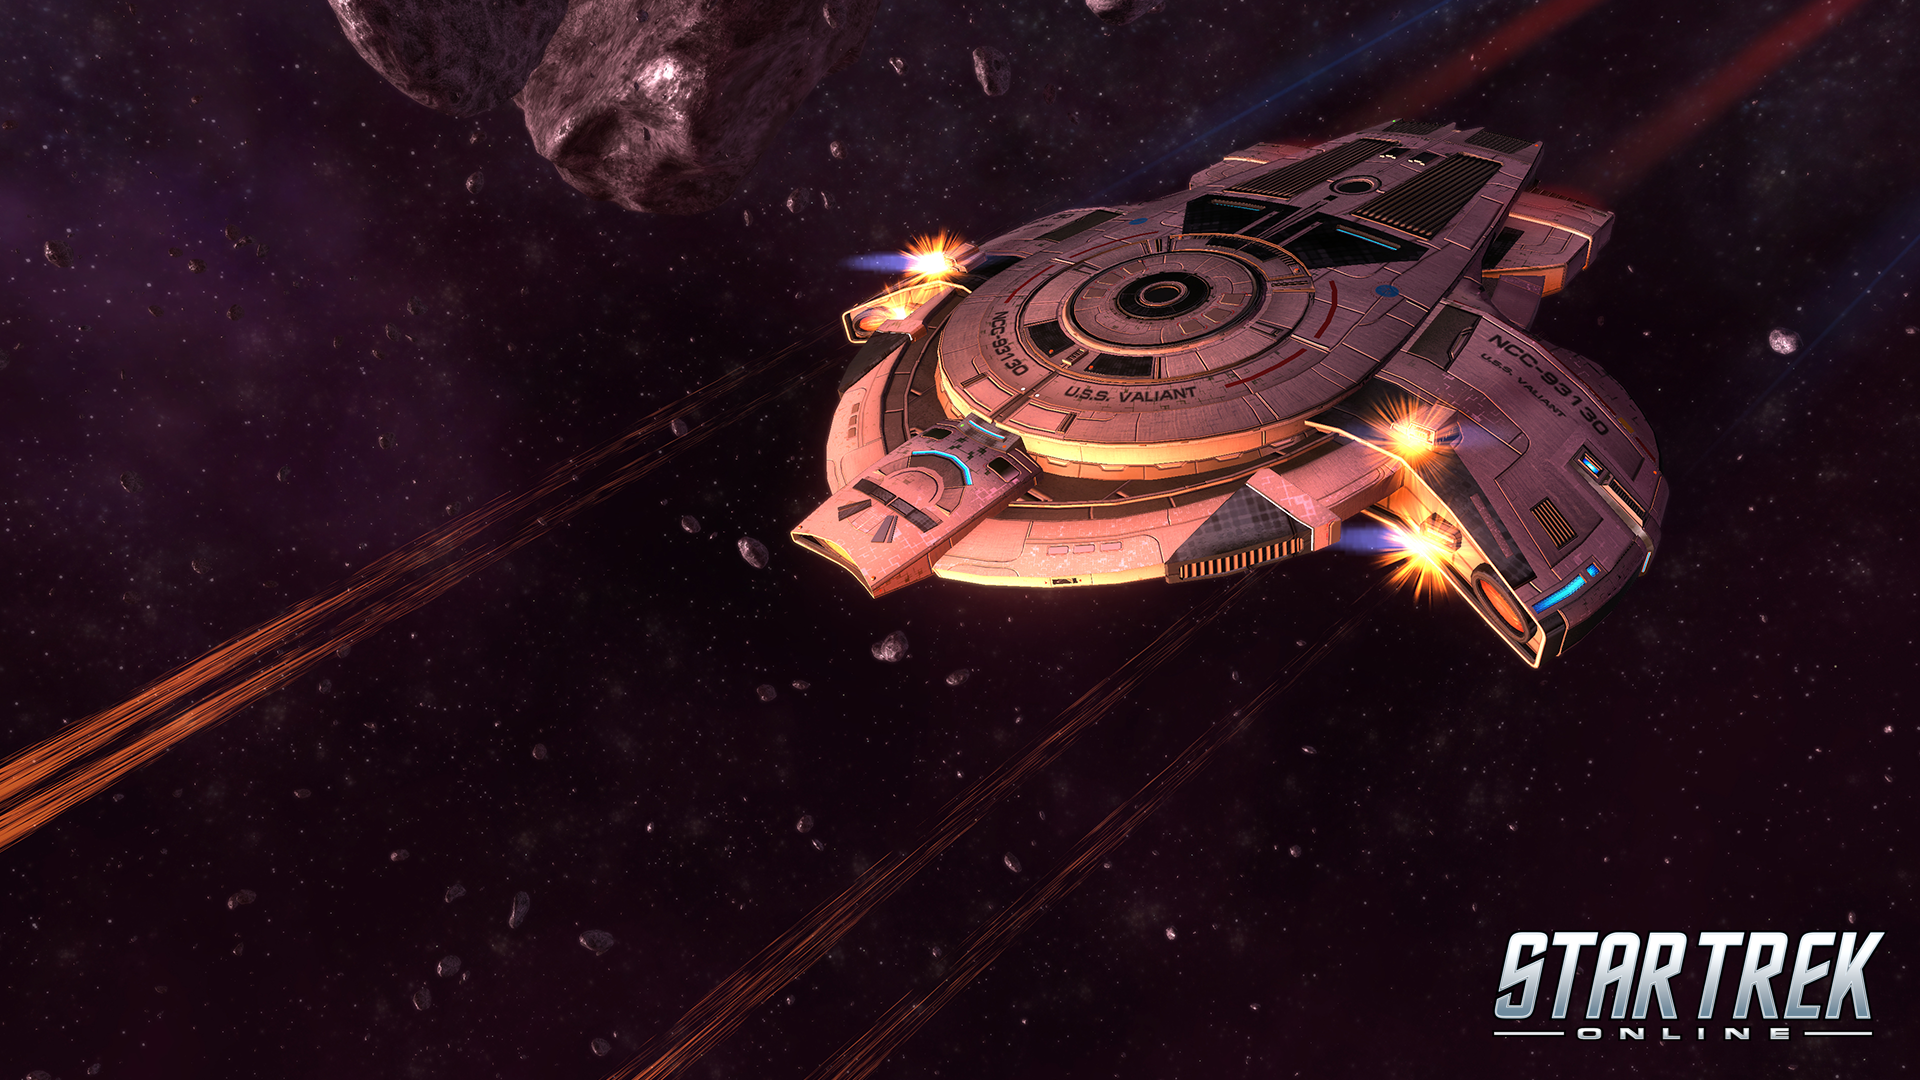 Star Trek Online Valiant-class Escort ship